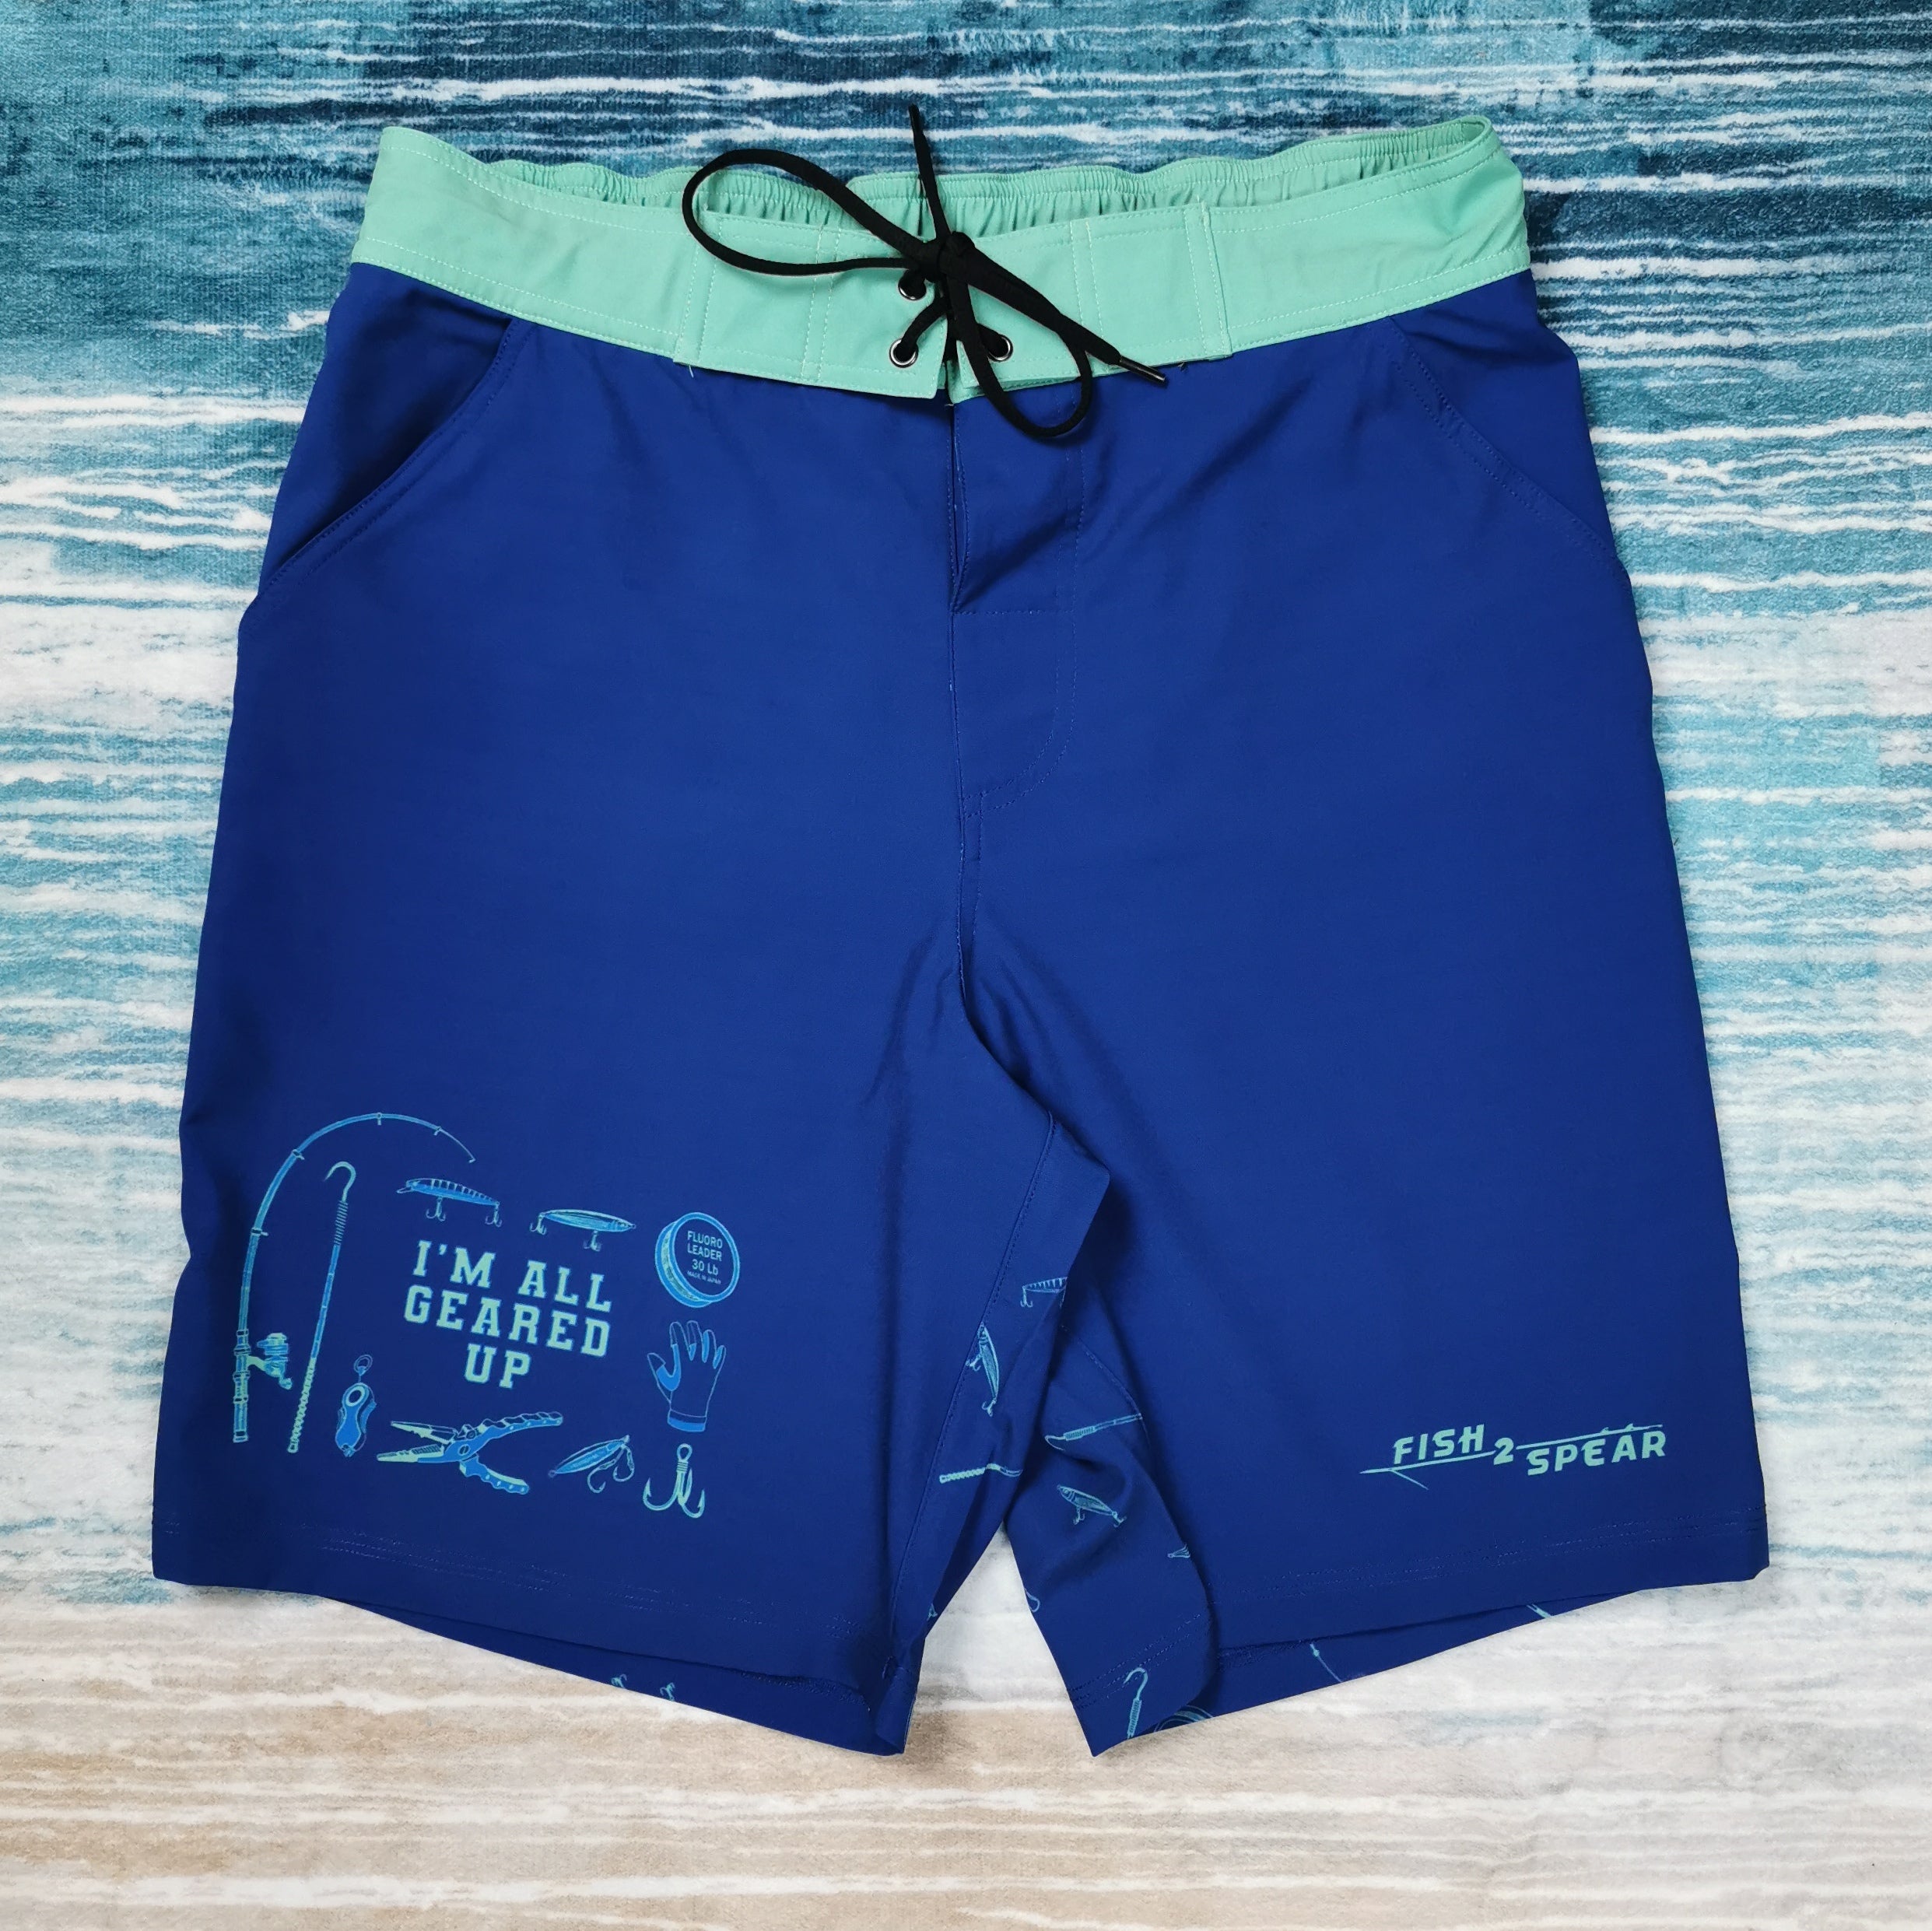 Fishing Shorts, Board Short, Swimming Short, Water Repellent Short